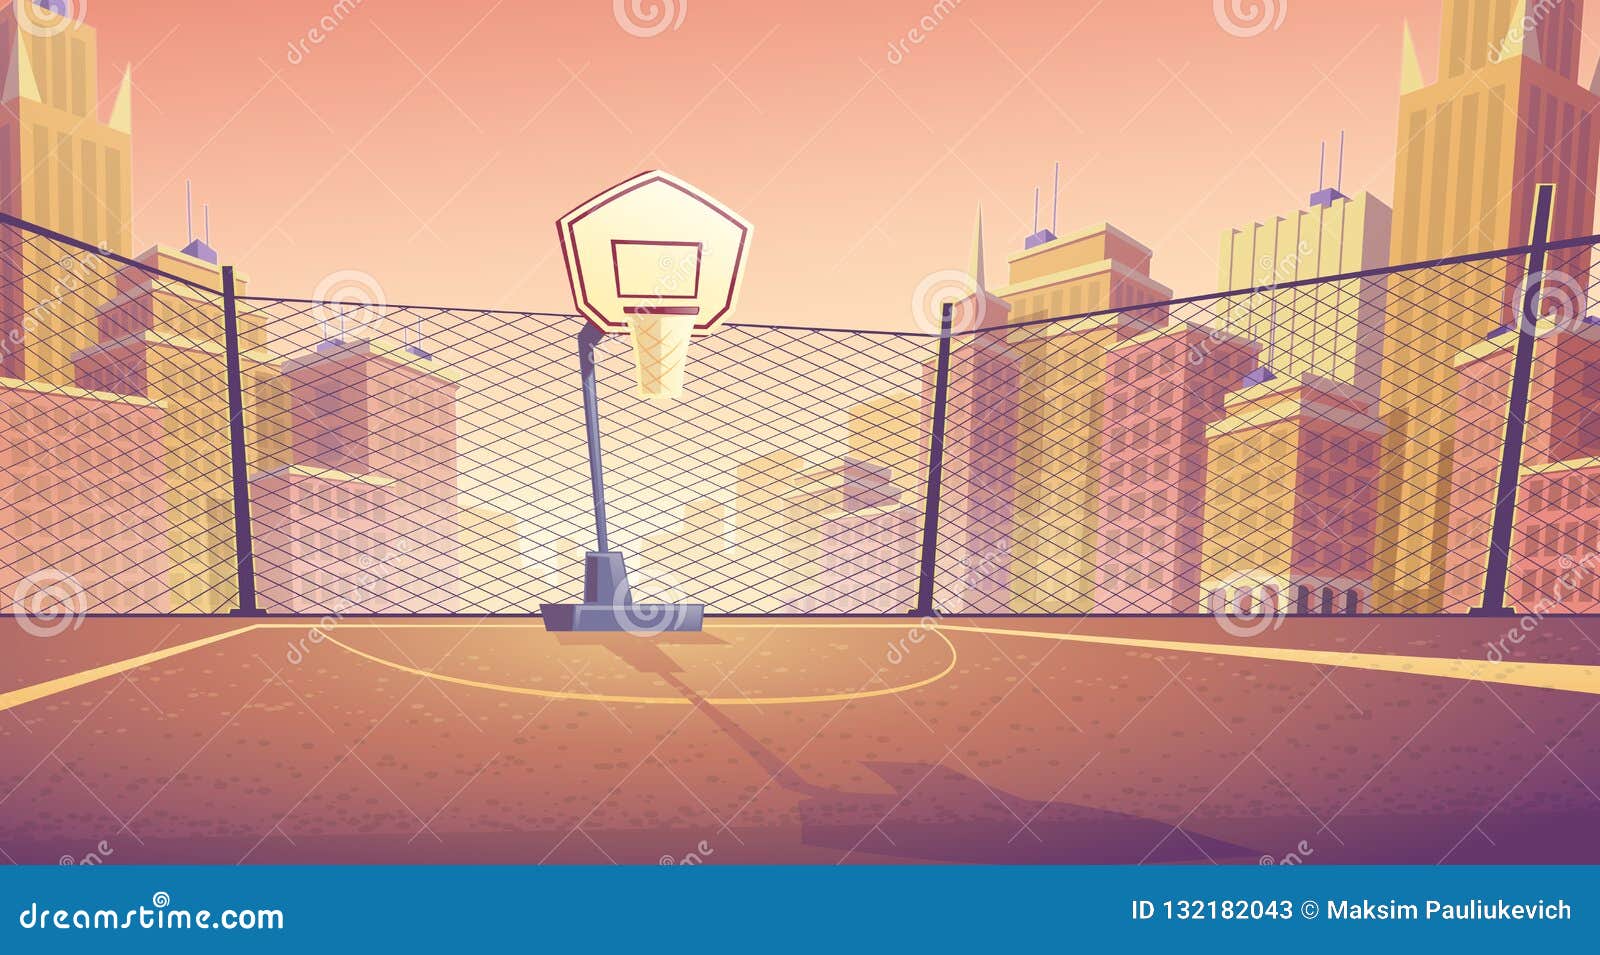  cartoon background of street basketball court